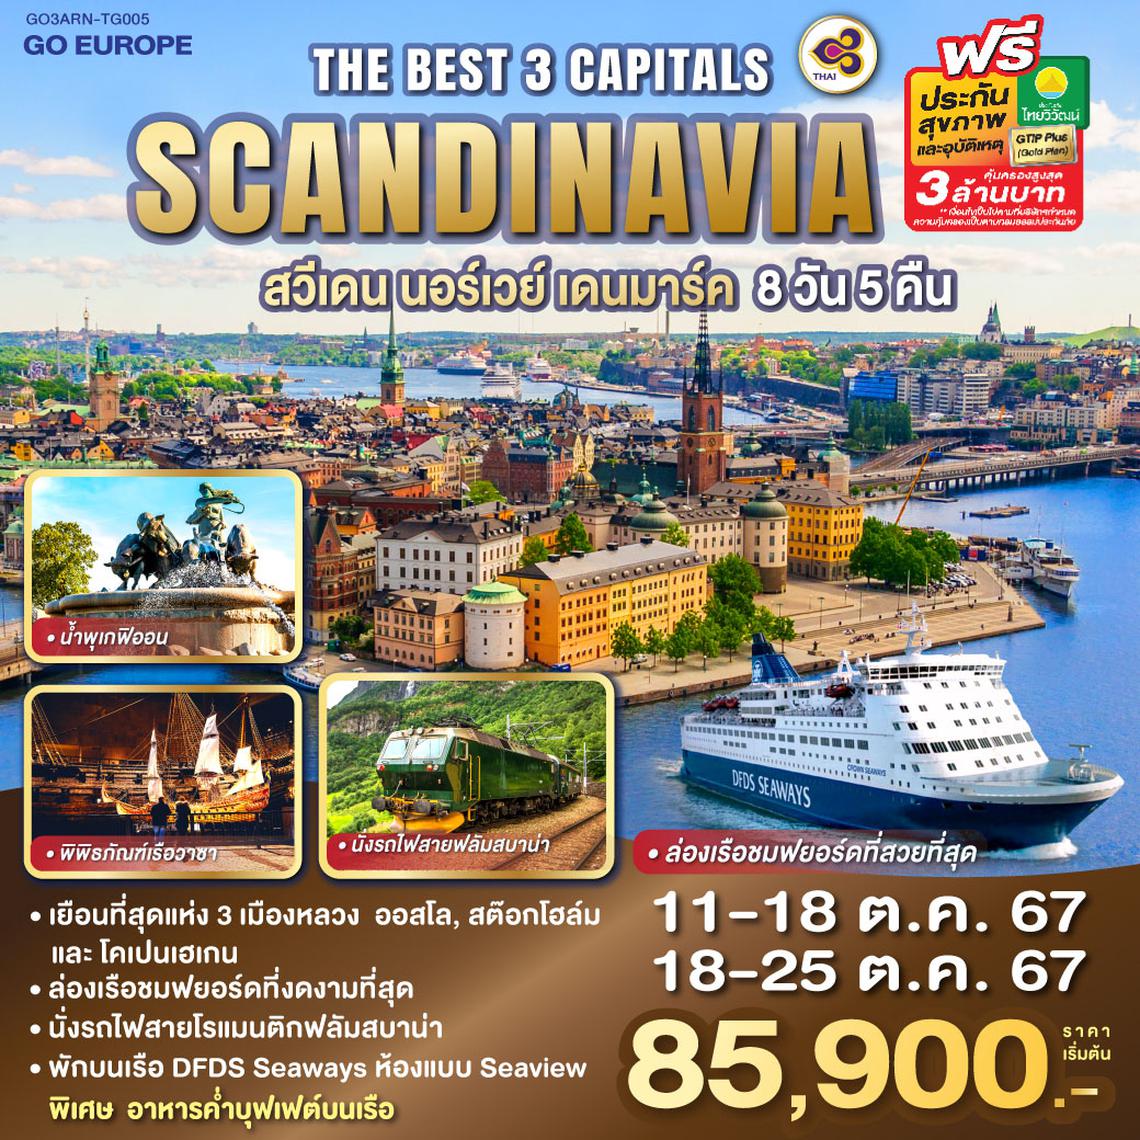 THE BEST 3 CAPITALS SCANDINAVIA สวีเดน – นอร์เวย์ – เดนมาร์ค 8 วัน 5 คืน โดยสายการบินไทย (TG) ล่องเรือชมฟยอร์ดที่สวยที่สุด และ นั่งรถไฟสายฟลัมสบาน่า